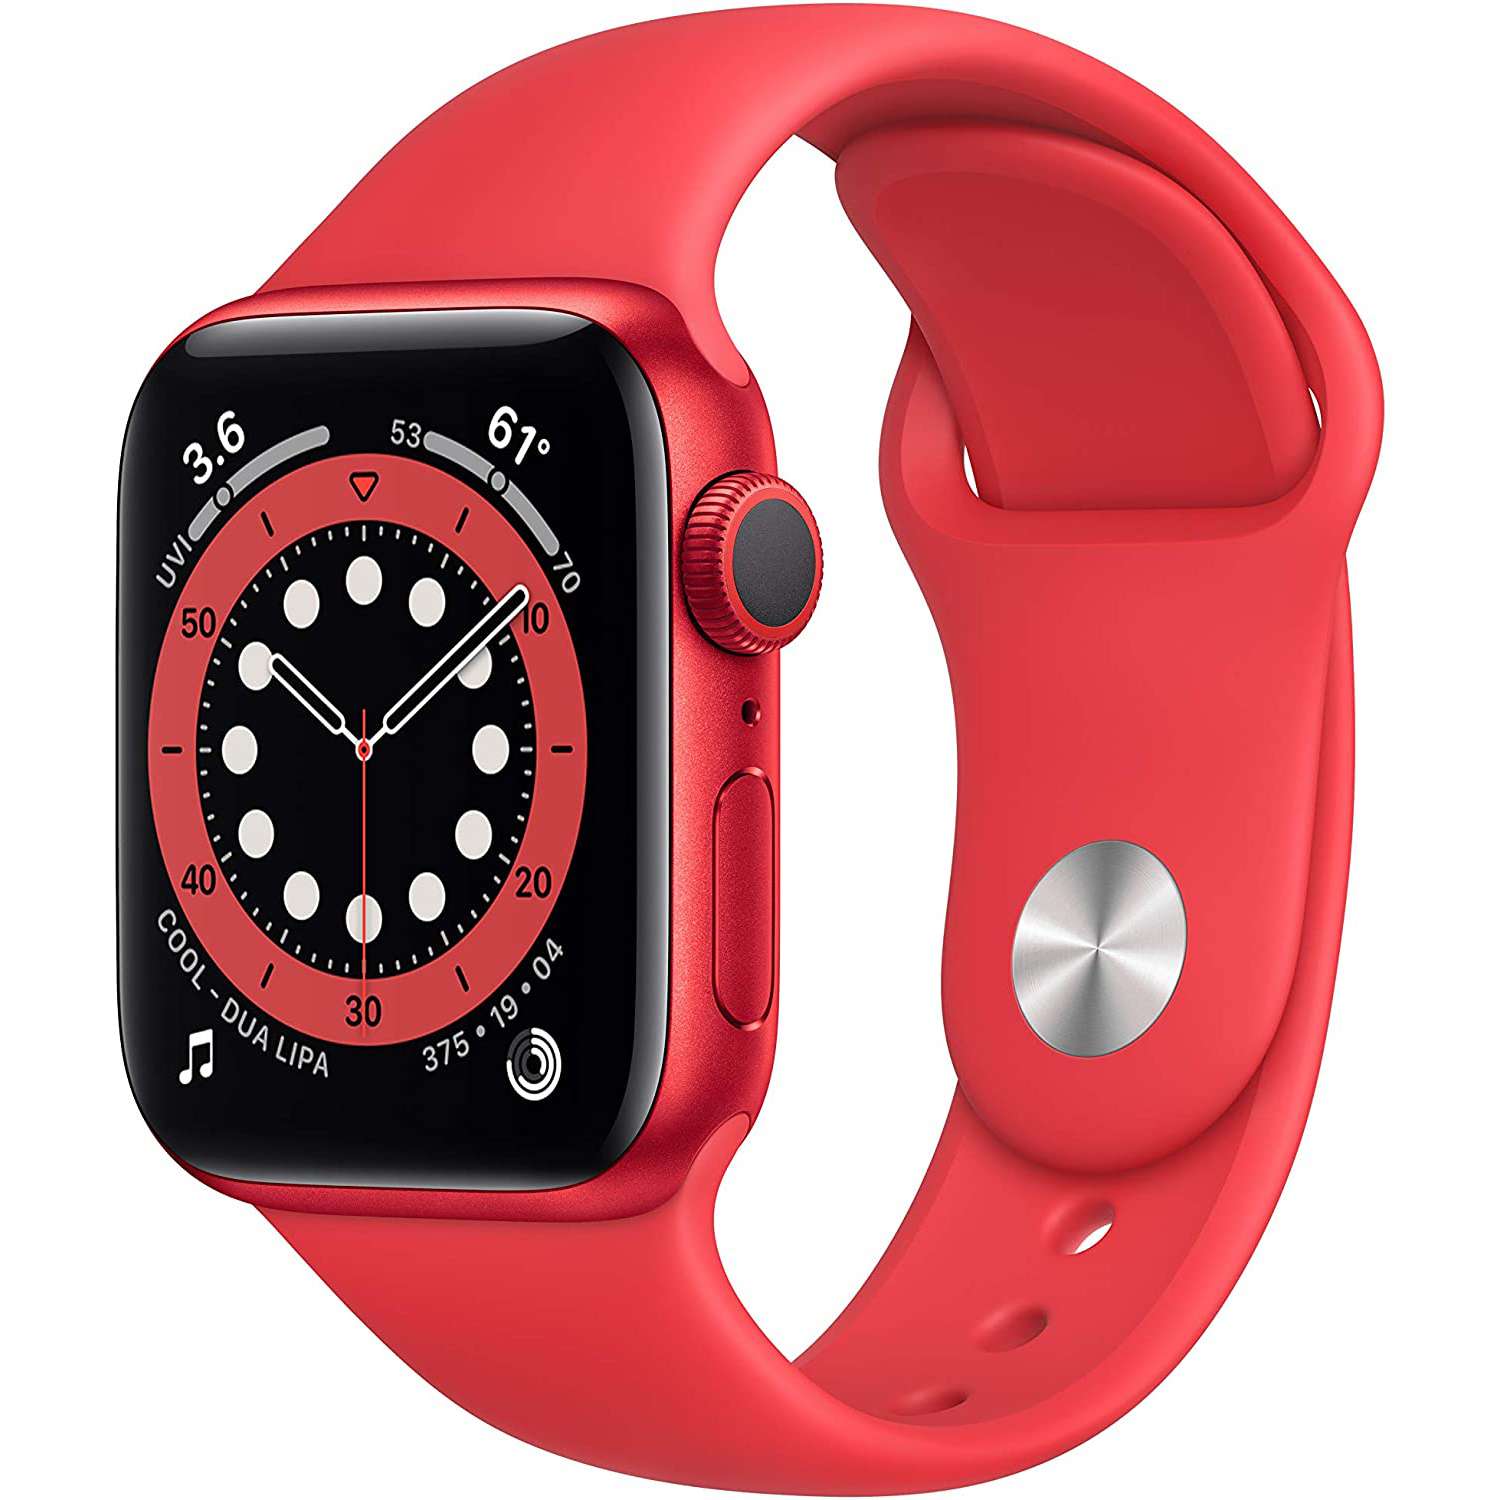 best apple watch cyber monday deals 2020 amazon